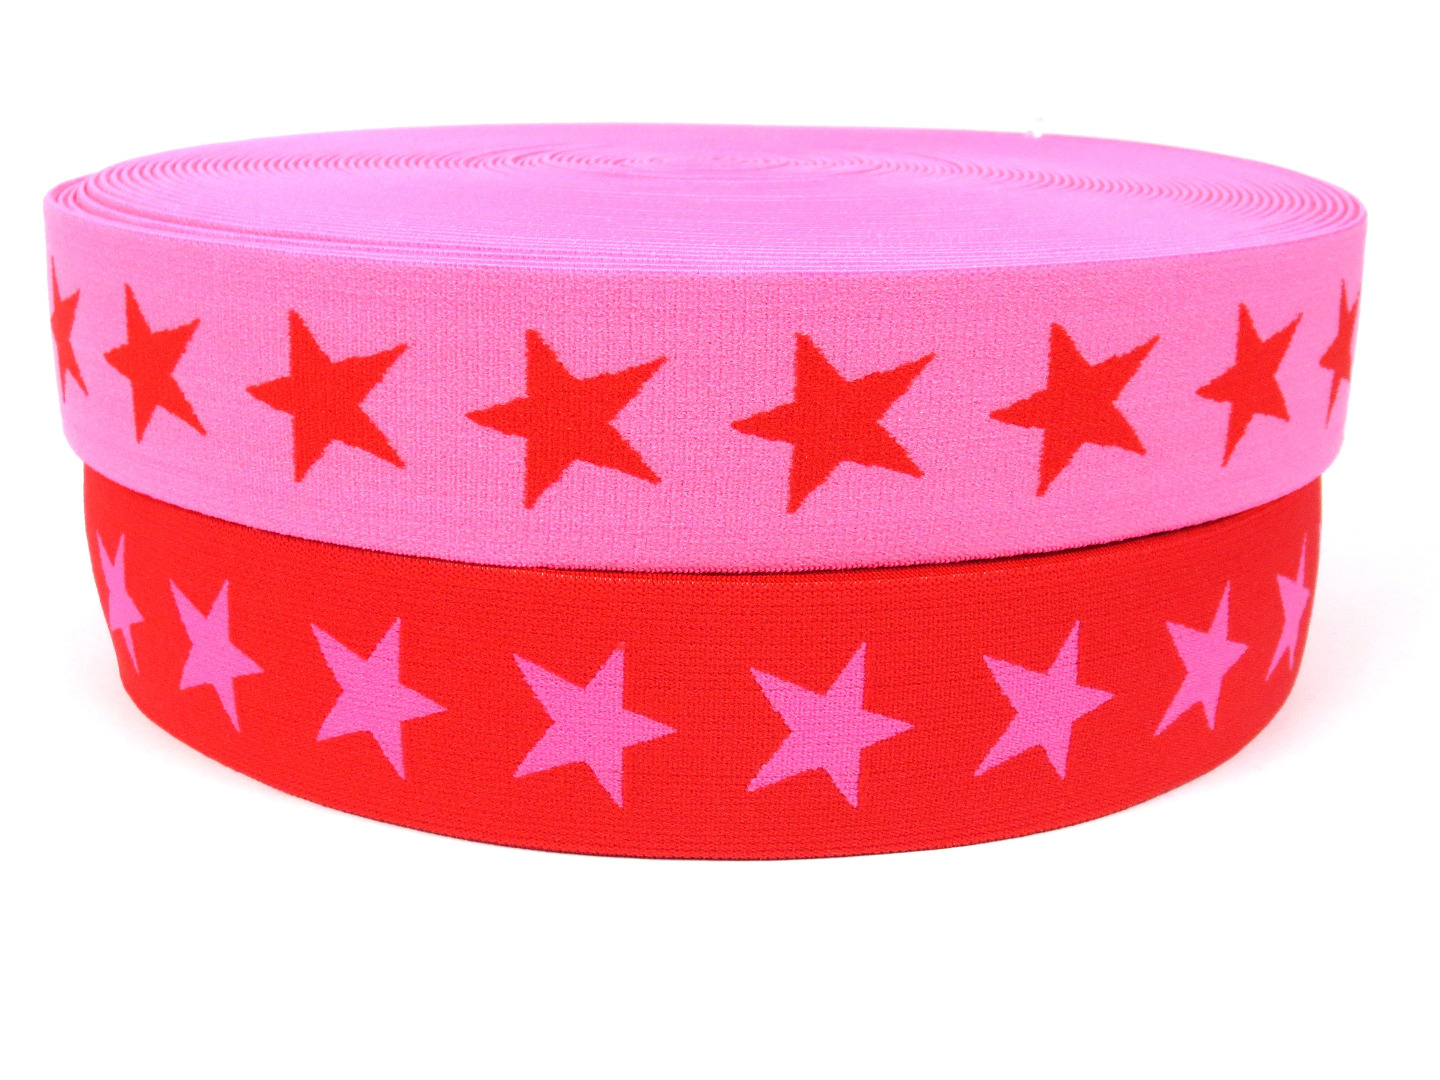 Gummiband Sterne - pink-rot - 4 cm Breit 3